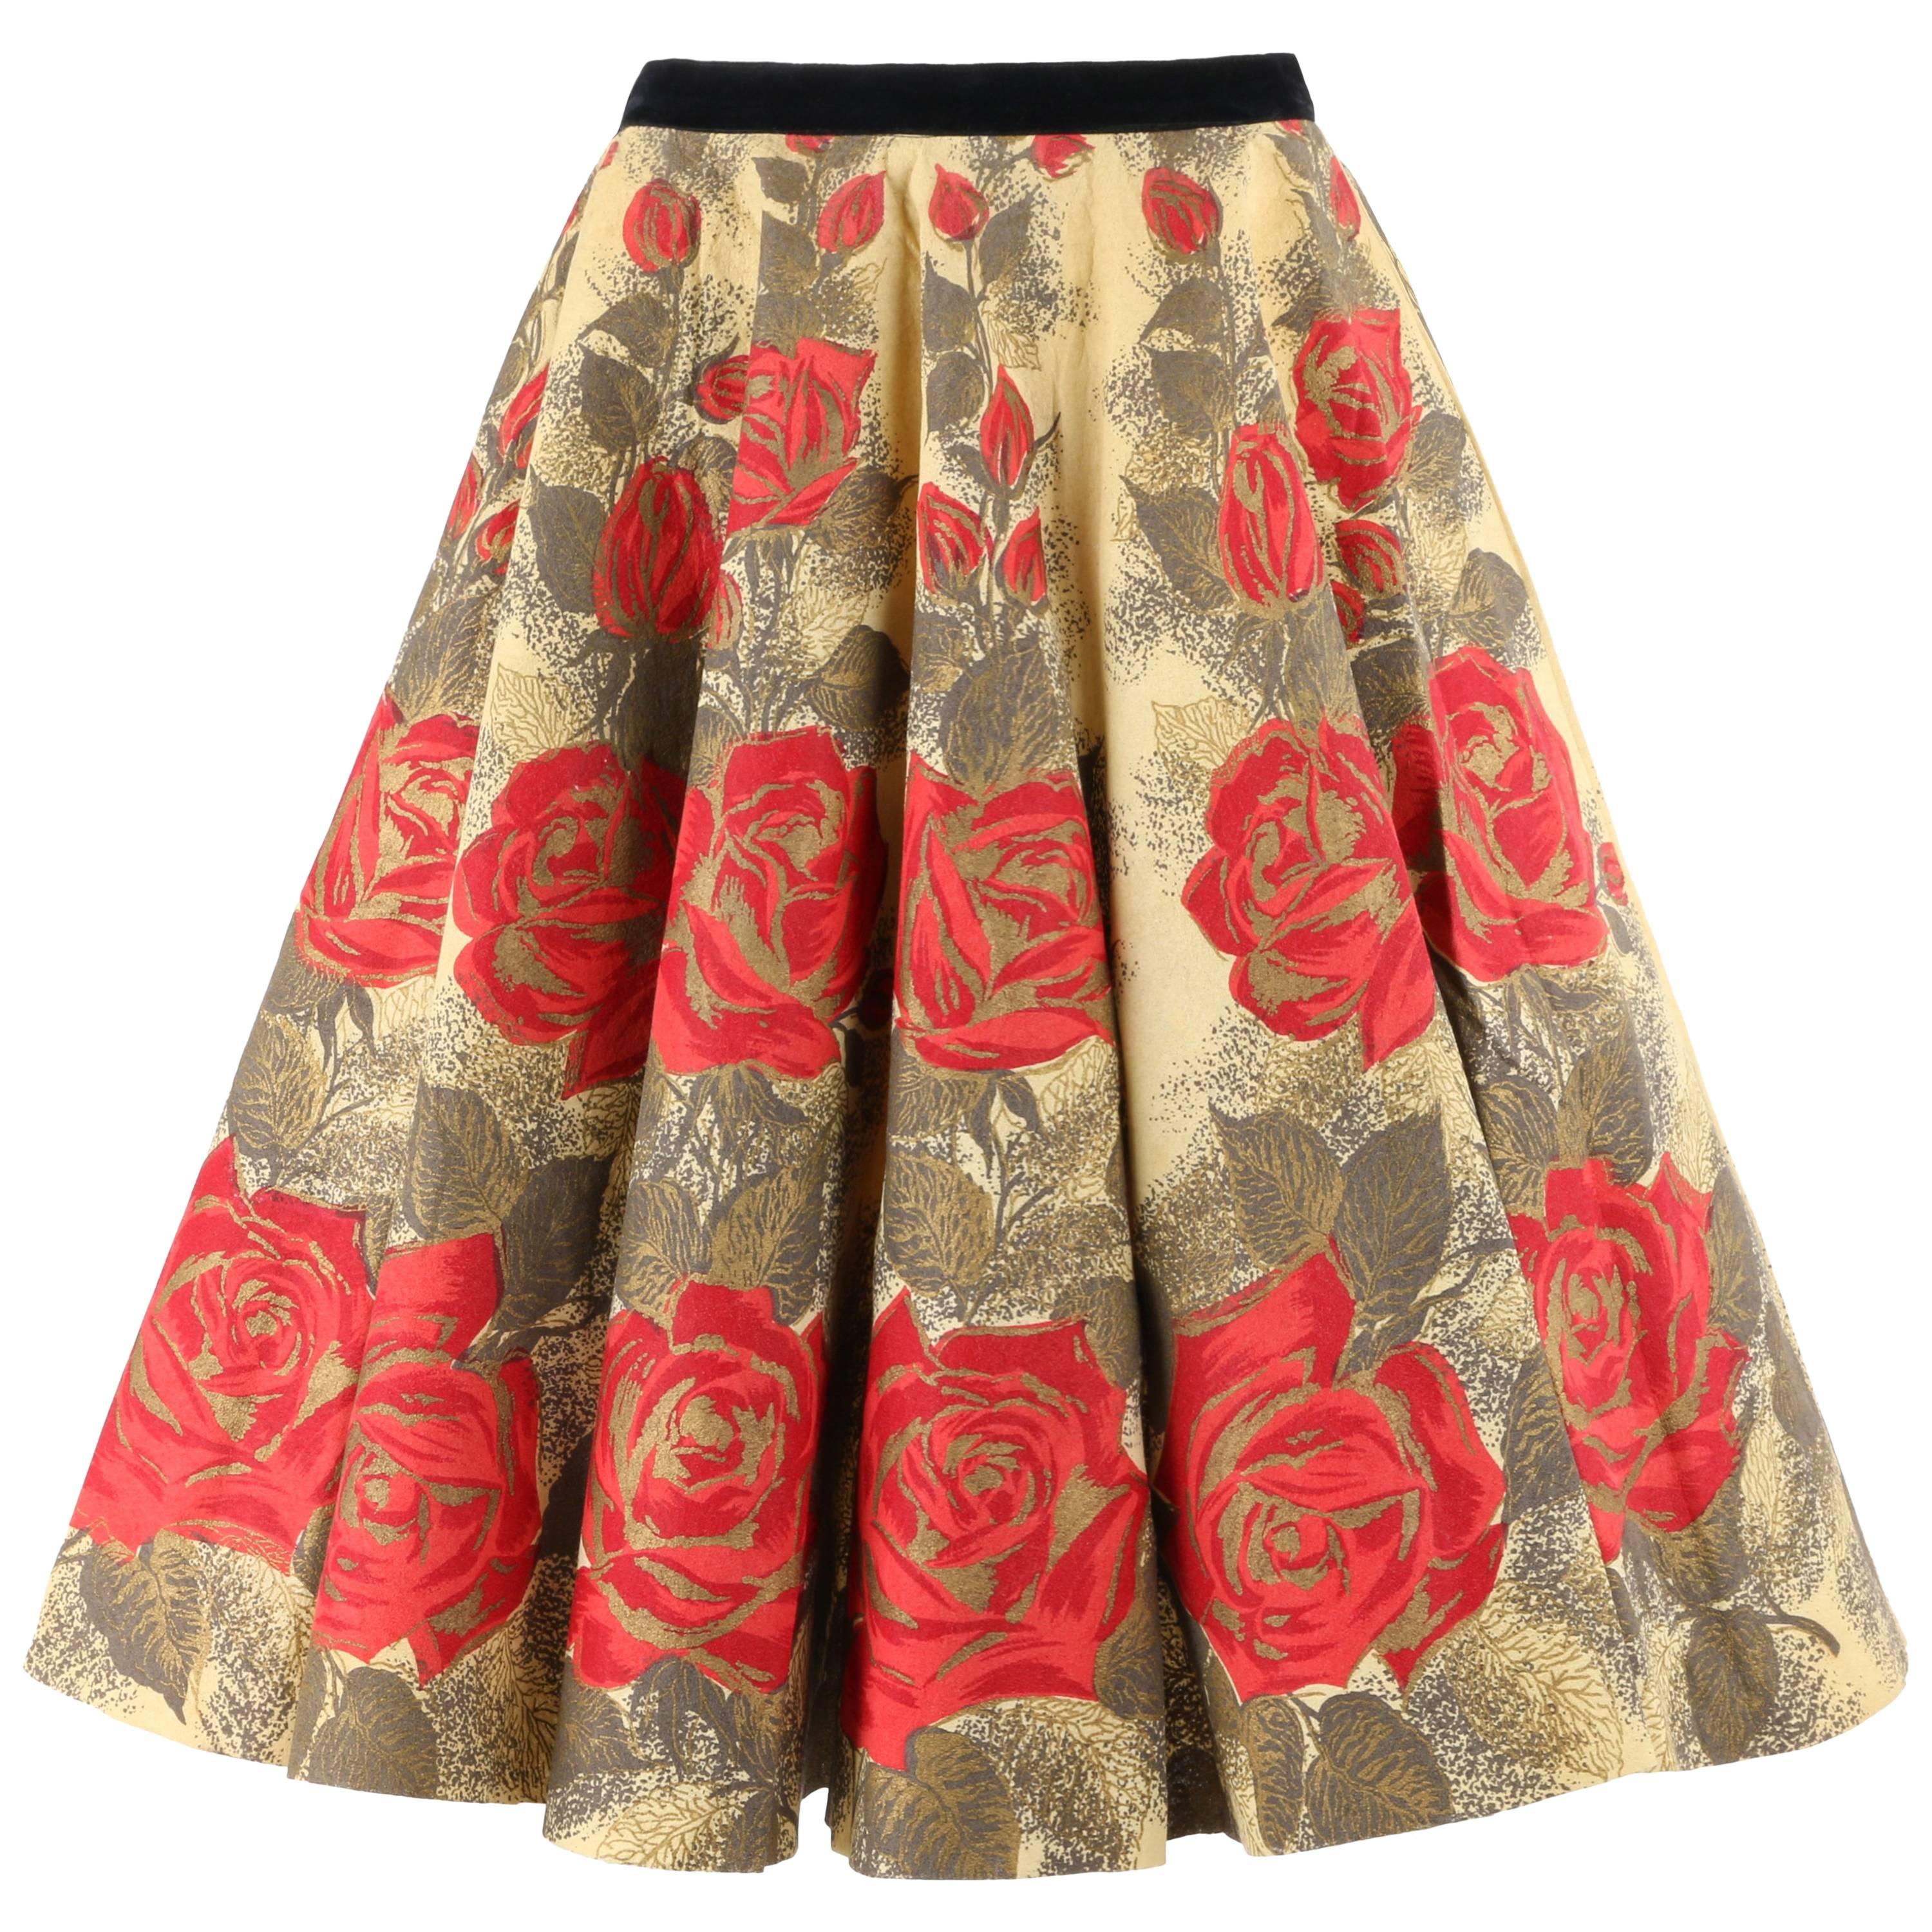 RATTET & SON "Retay" c.1950s Rose on Yellow Floral Print Paper Circle Skirt RARE